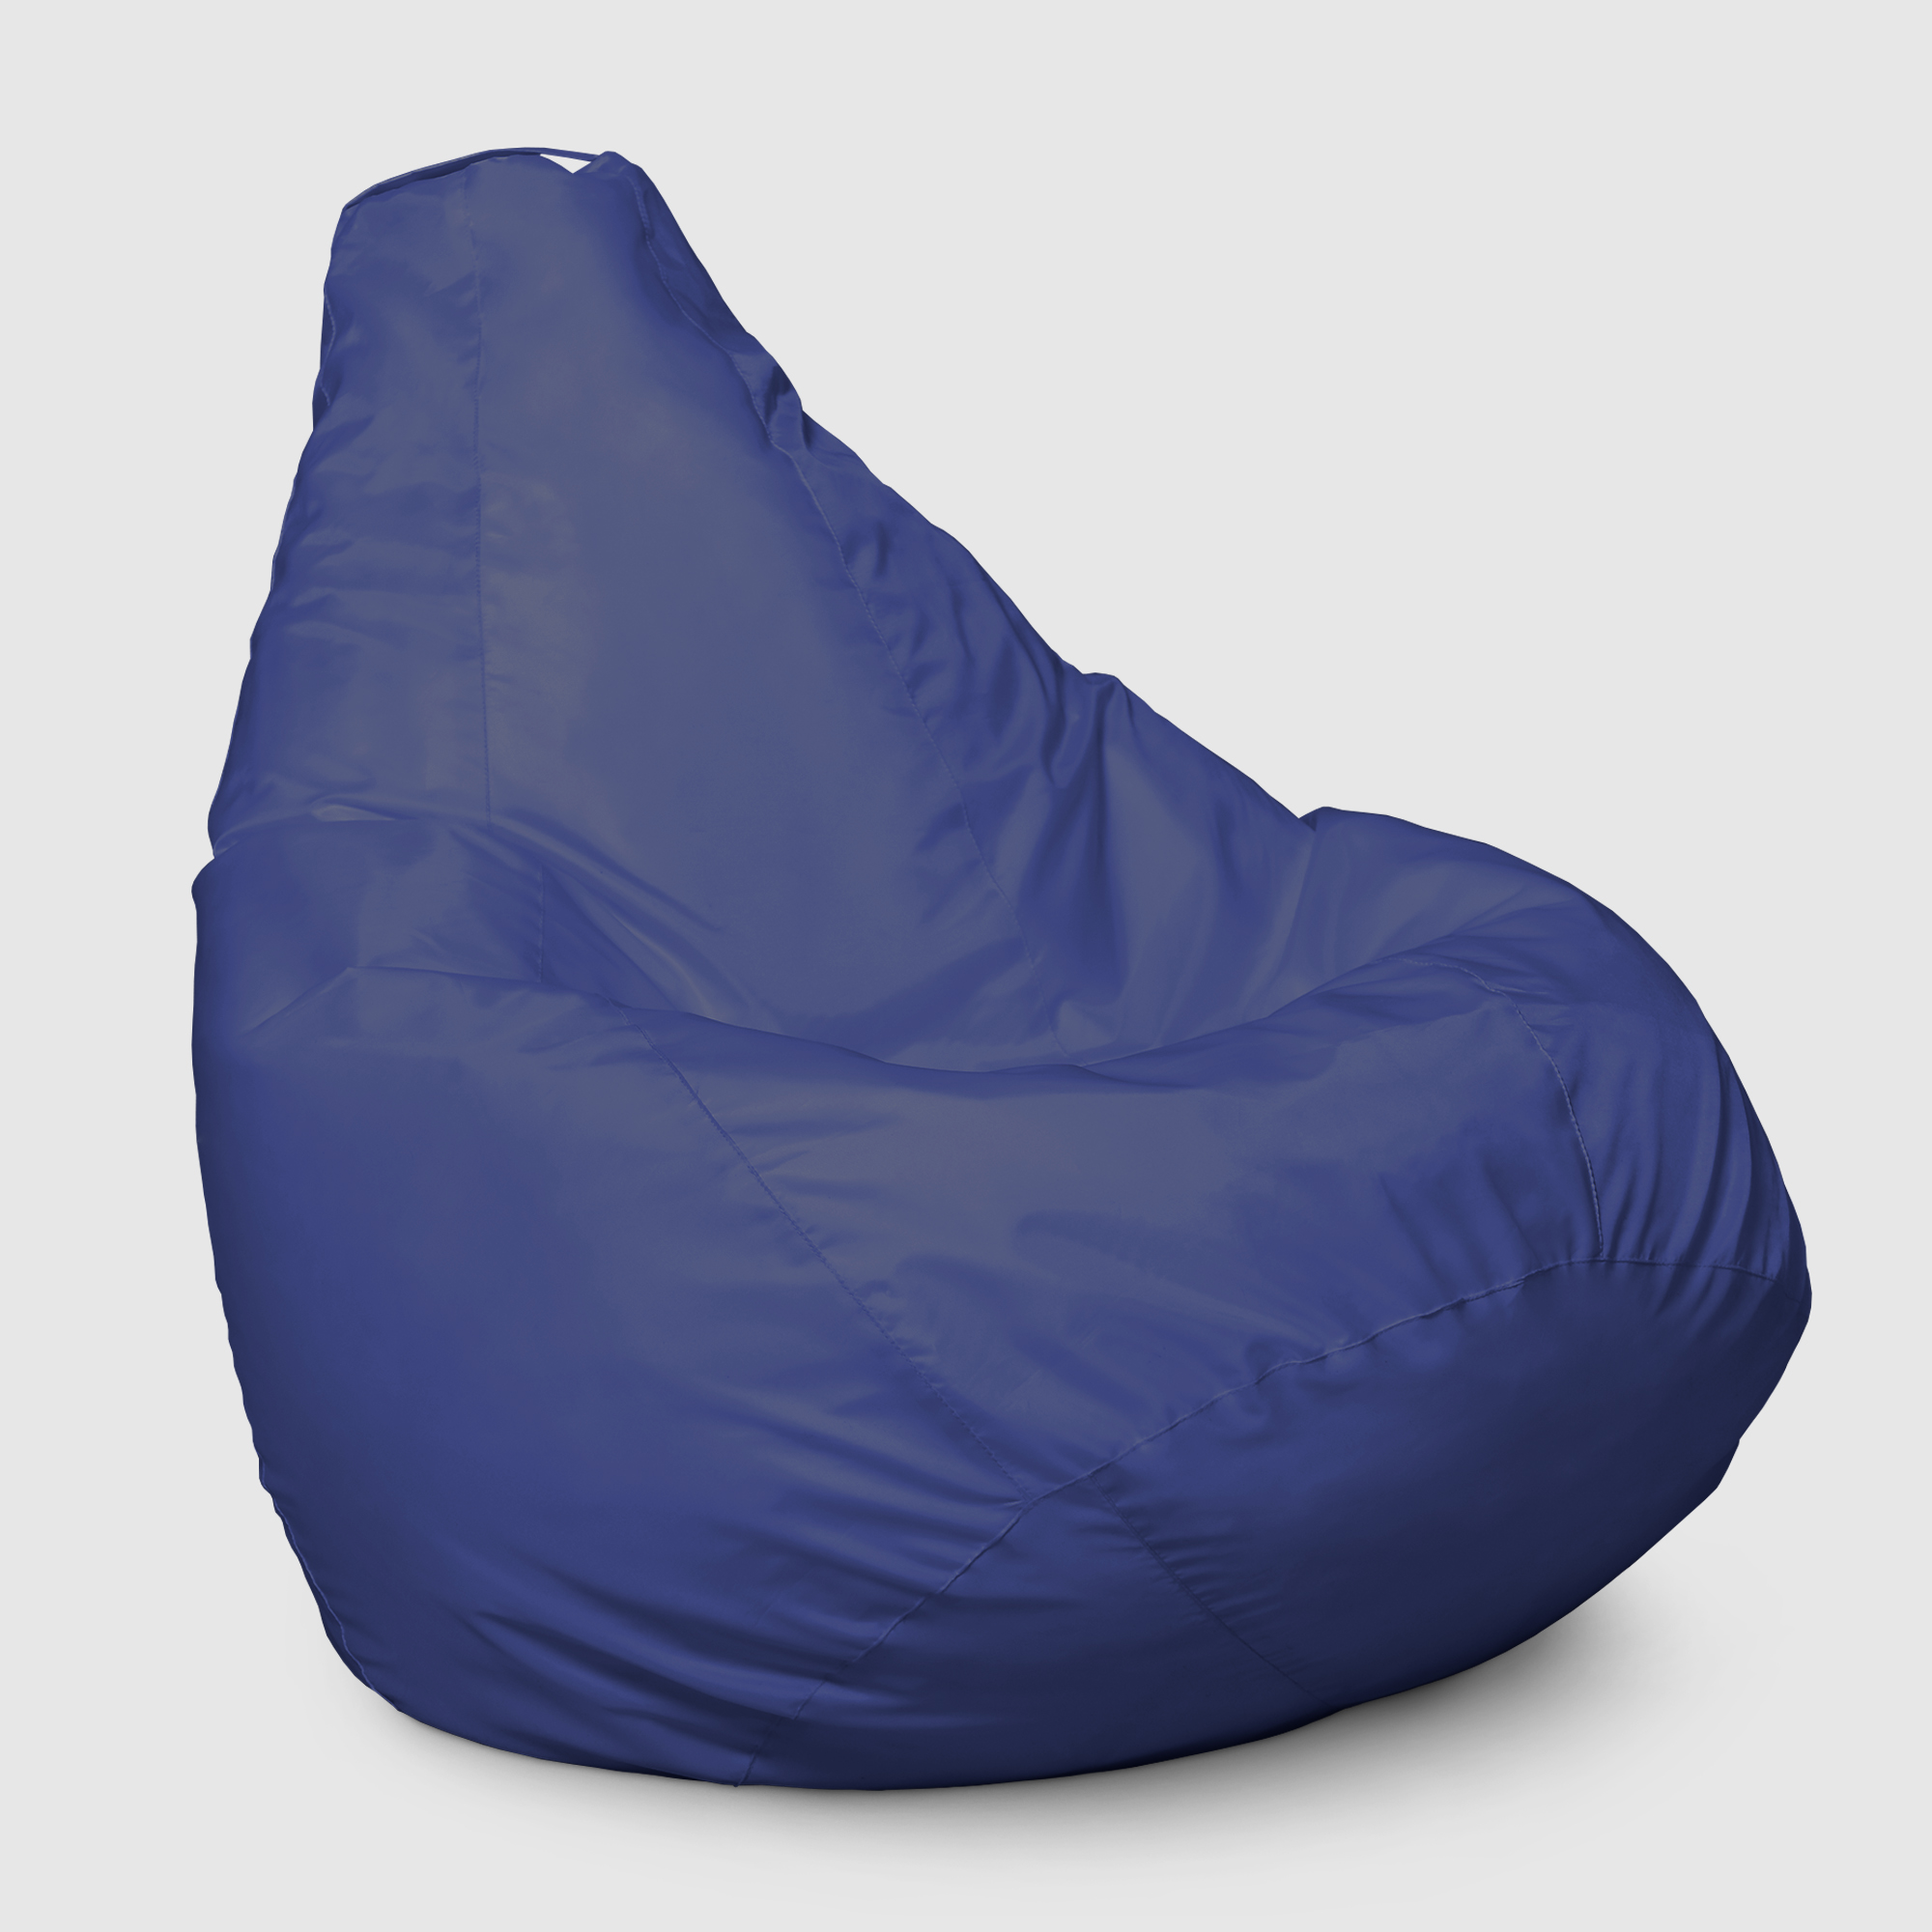 Кресло мешок Dreambag Меган xl темно-синее 85х85х125 см кресло мешок dreambag crazy xl